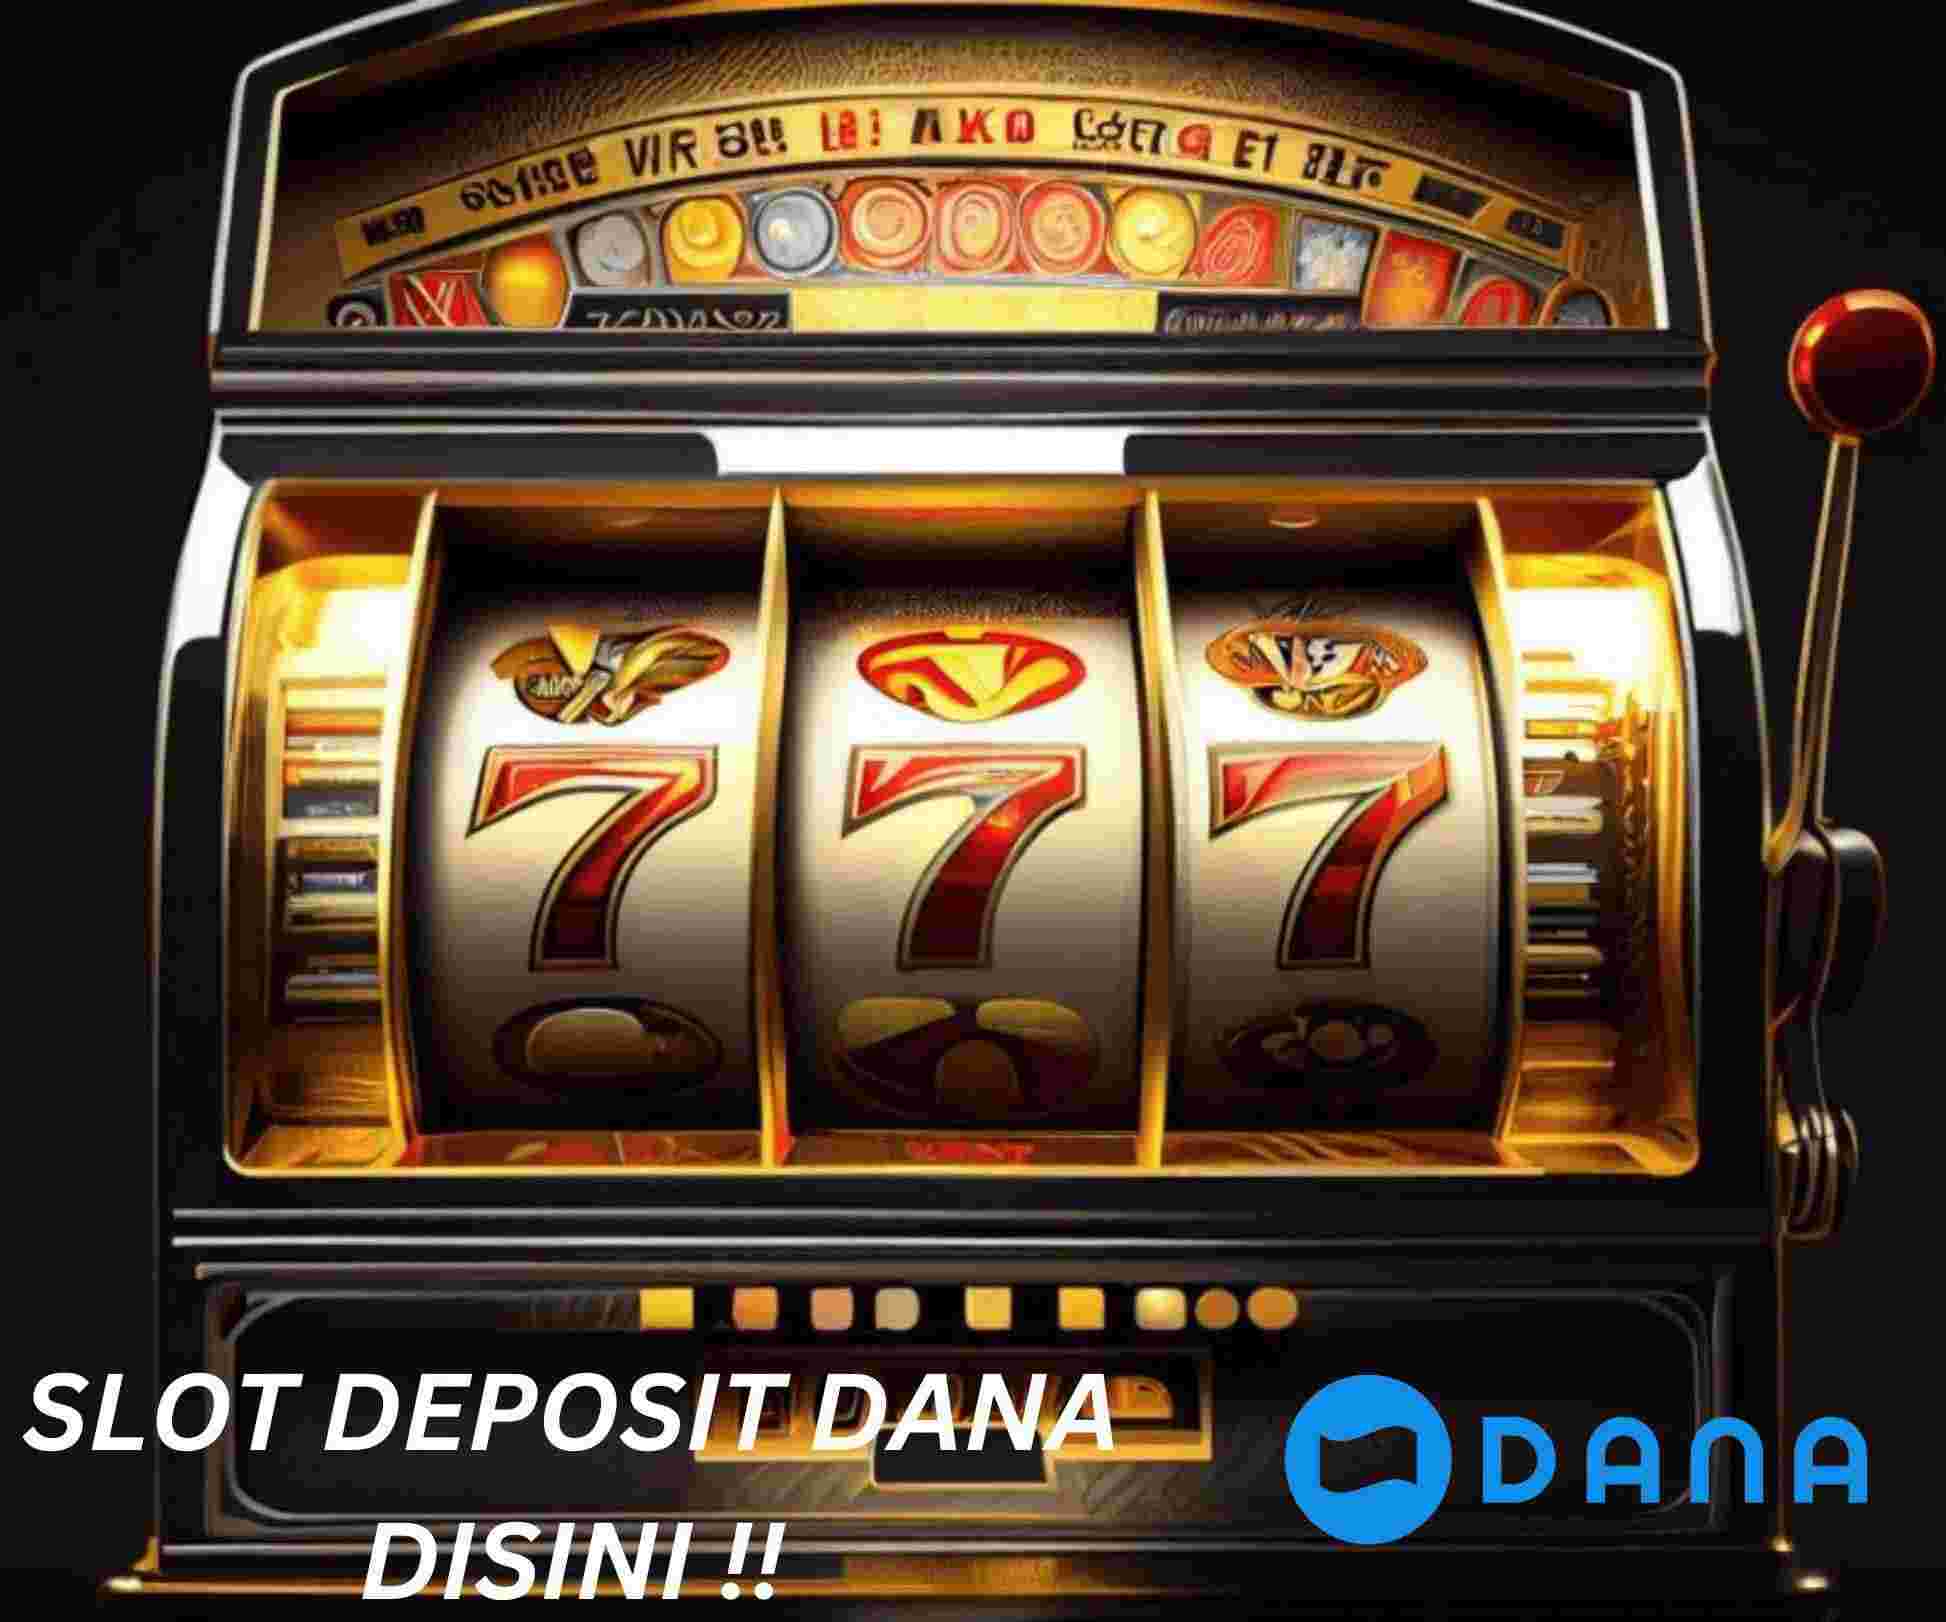 Gig into the slot deposit dana feature on janjiwin